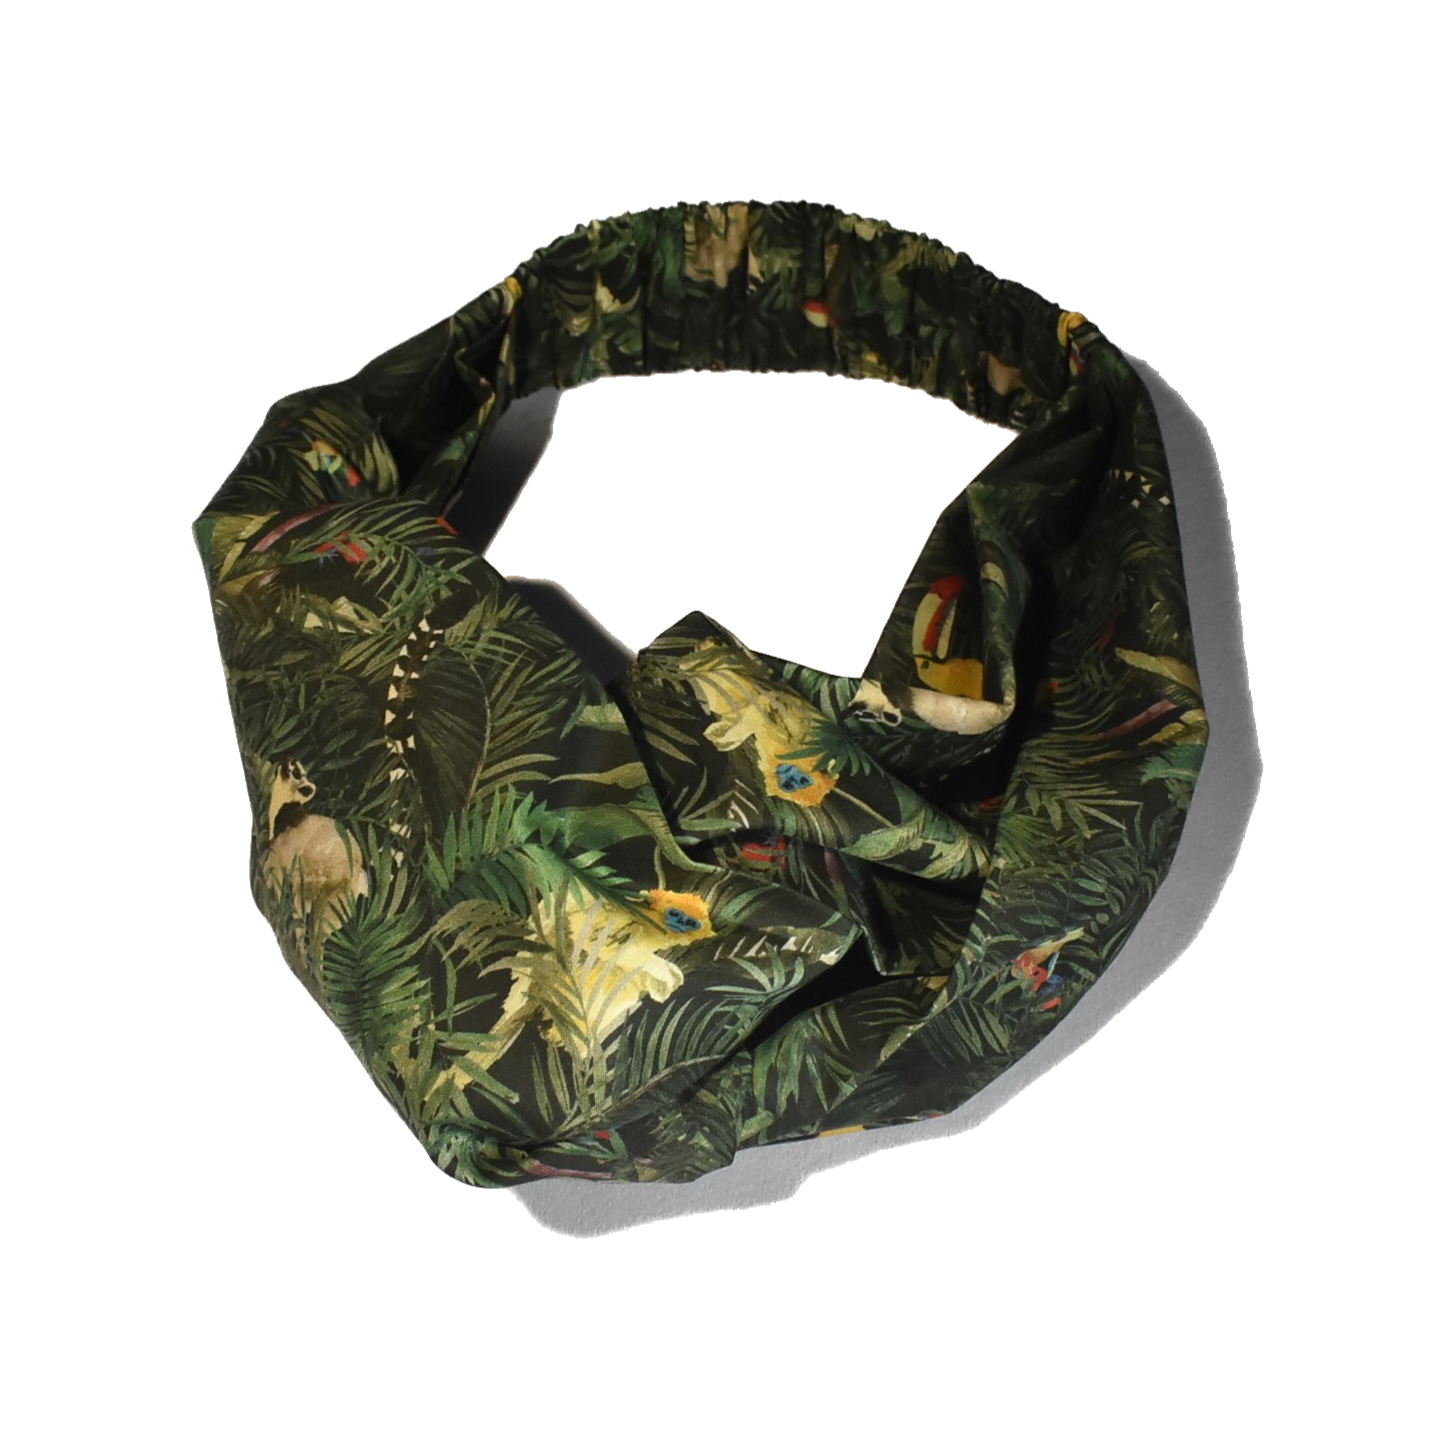 Twisted Turban Headband - Liberty of London Tou-Can Hide - Jungle Animals